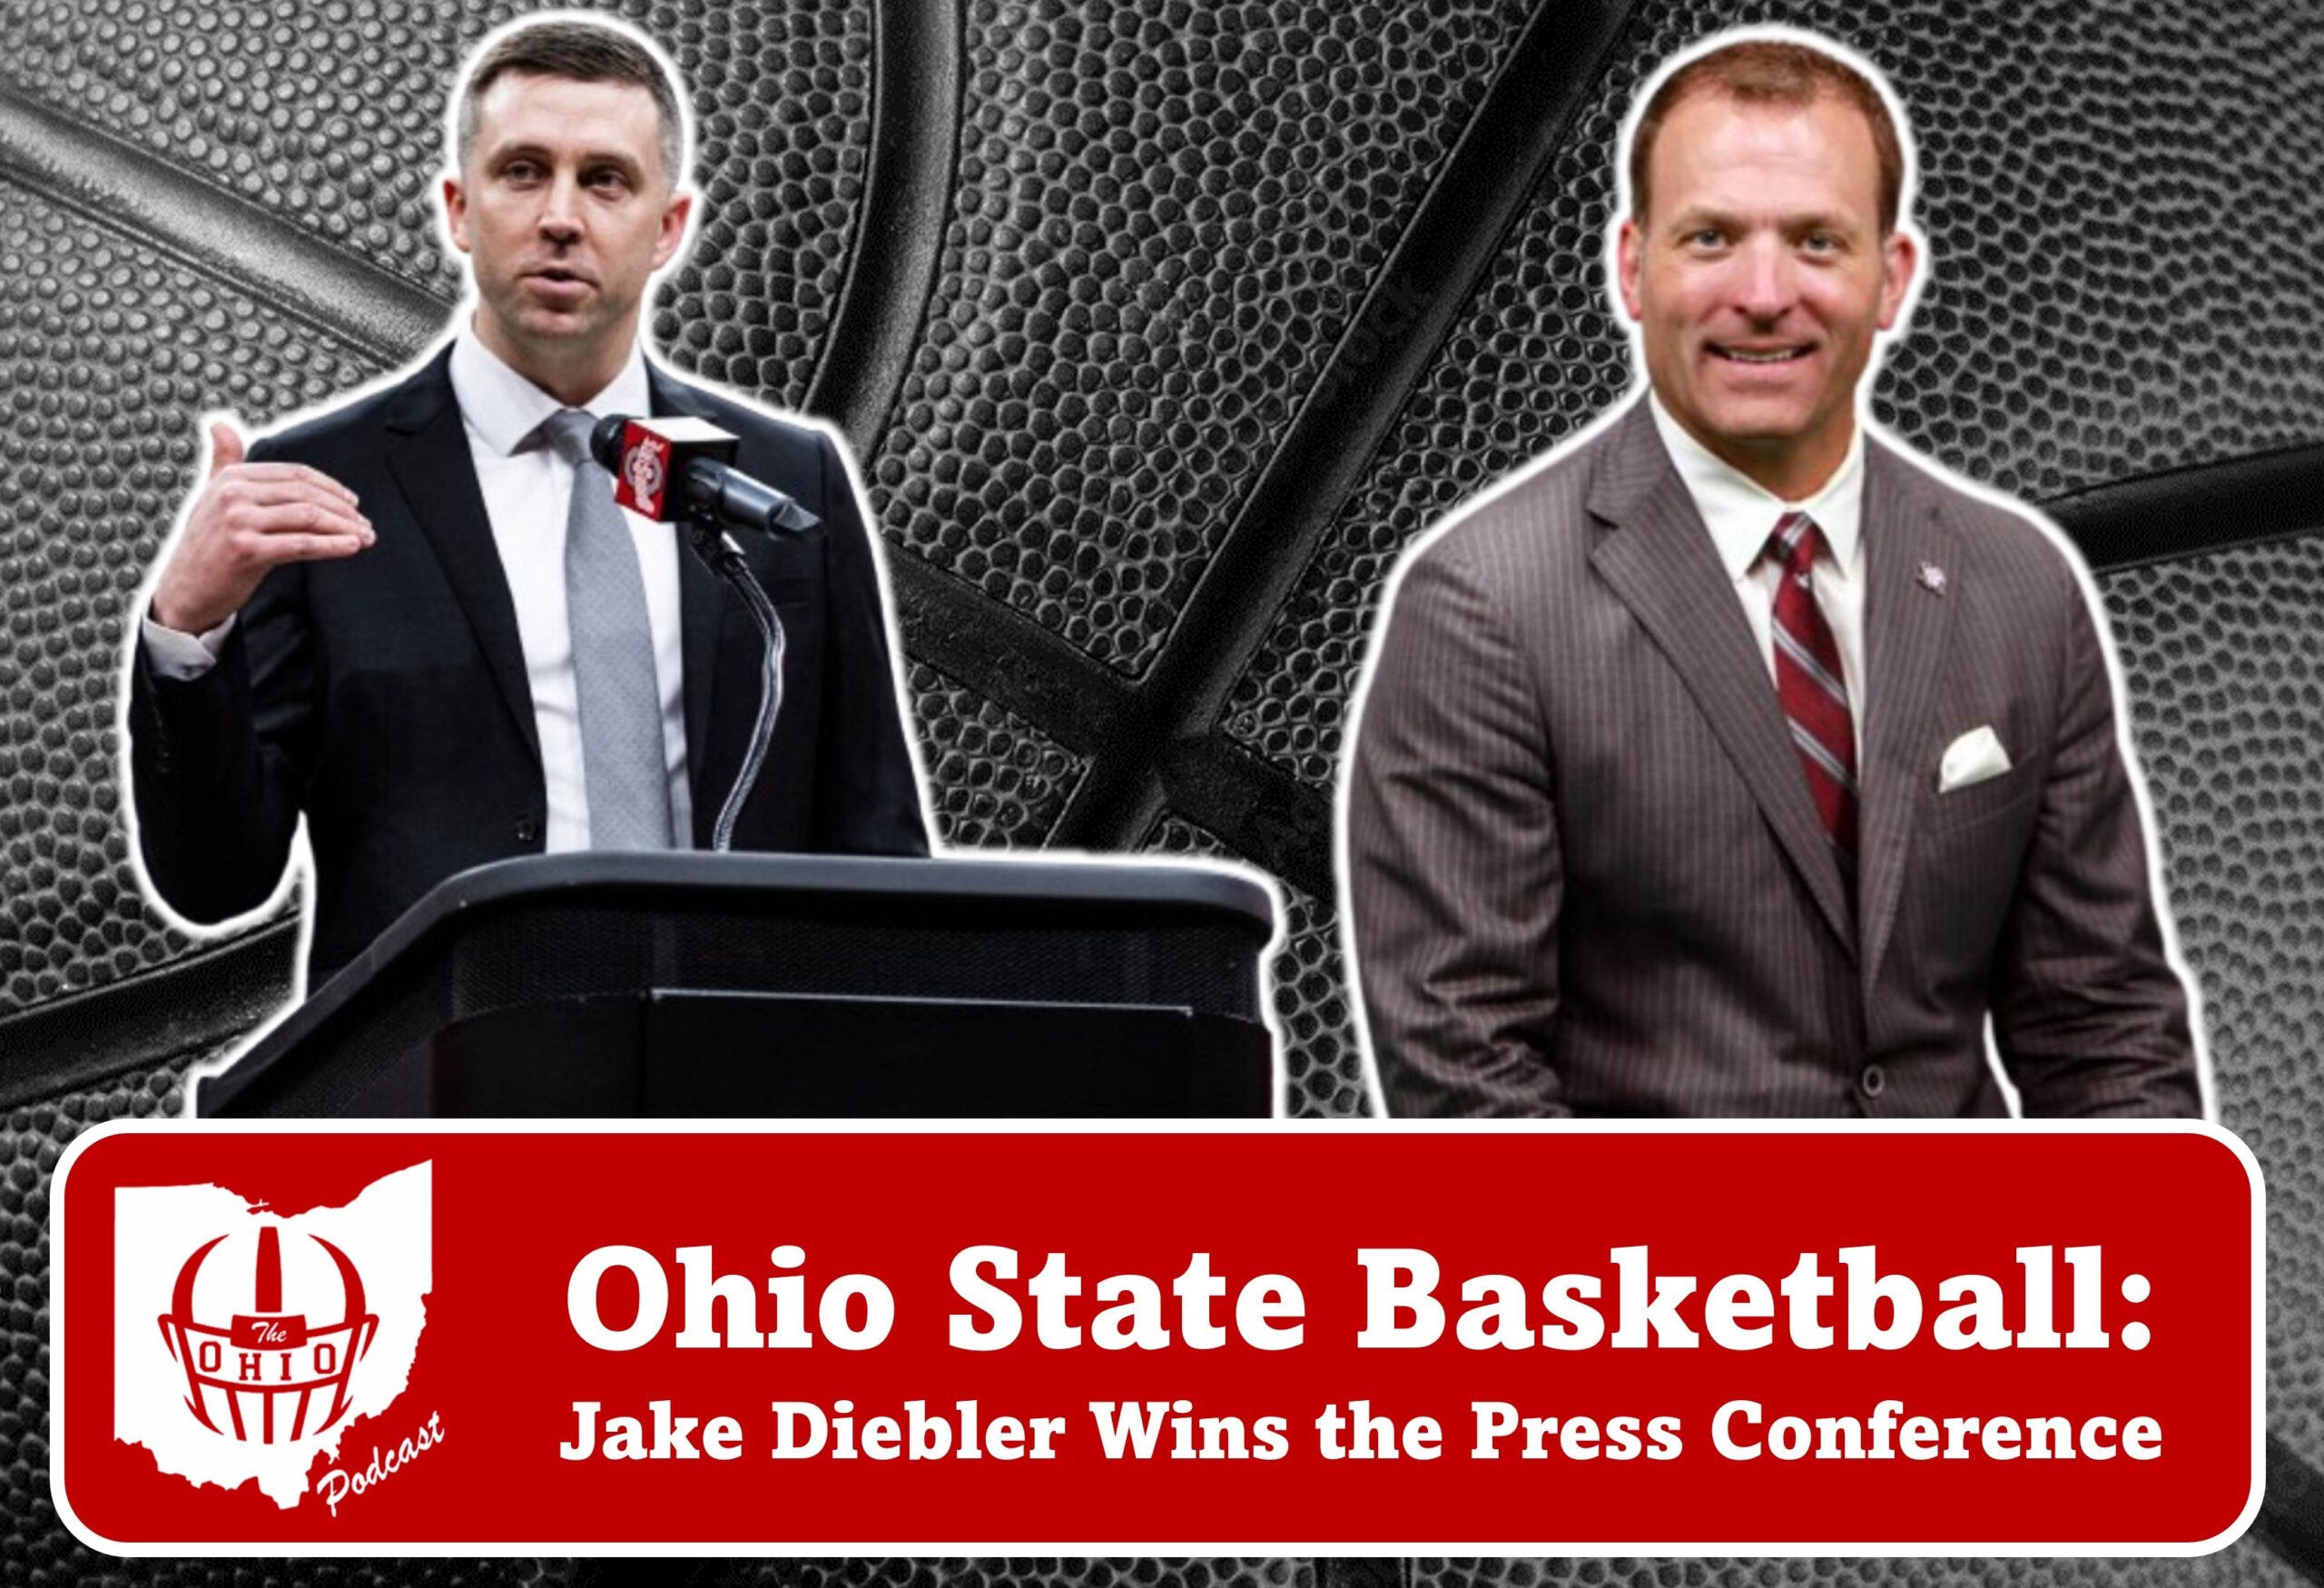 Jake Diebler Wins the Press Conference